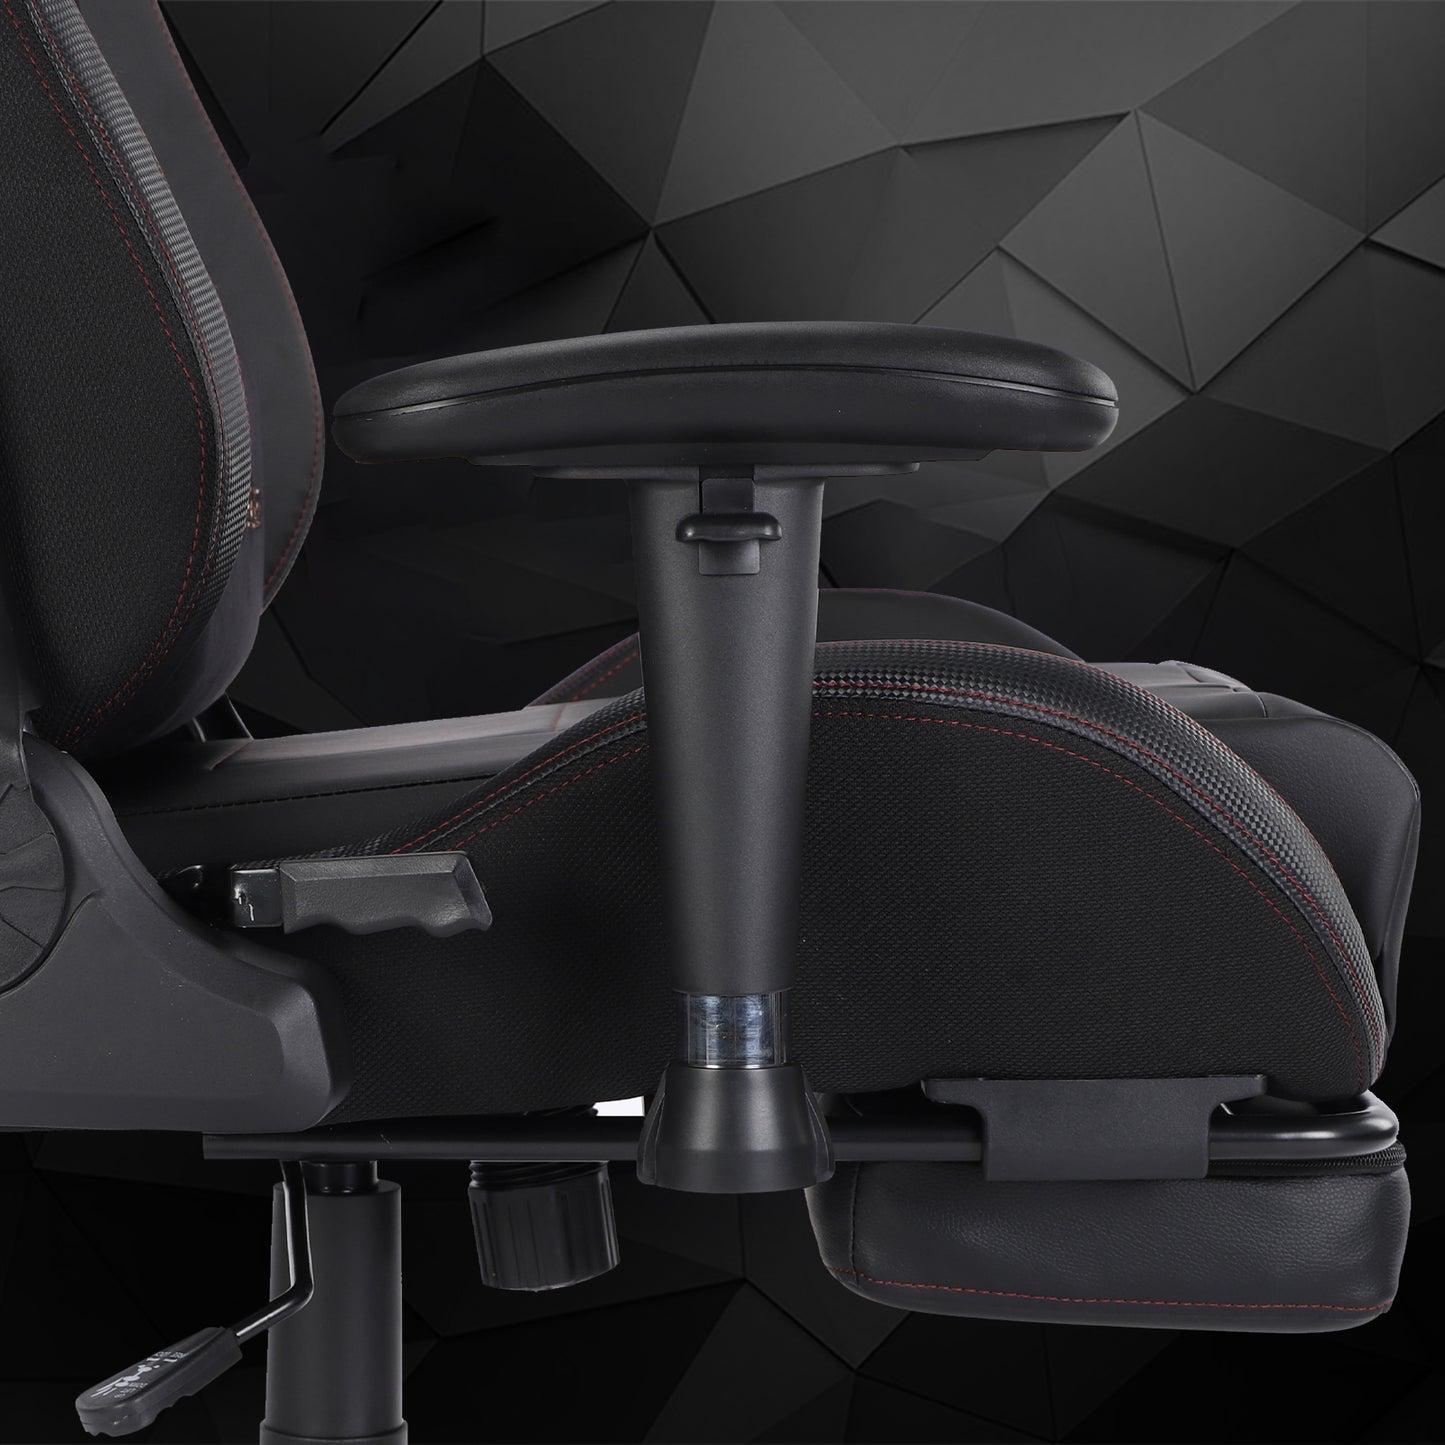 Ryder Pro Gaming Chair - Black